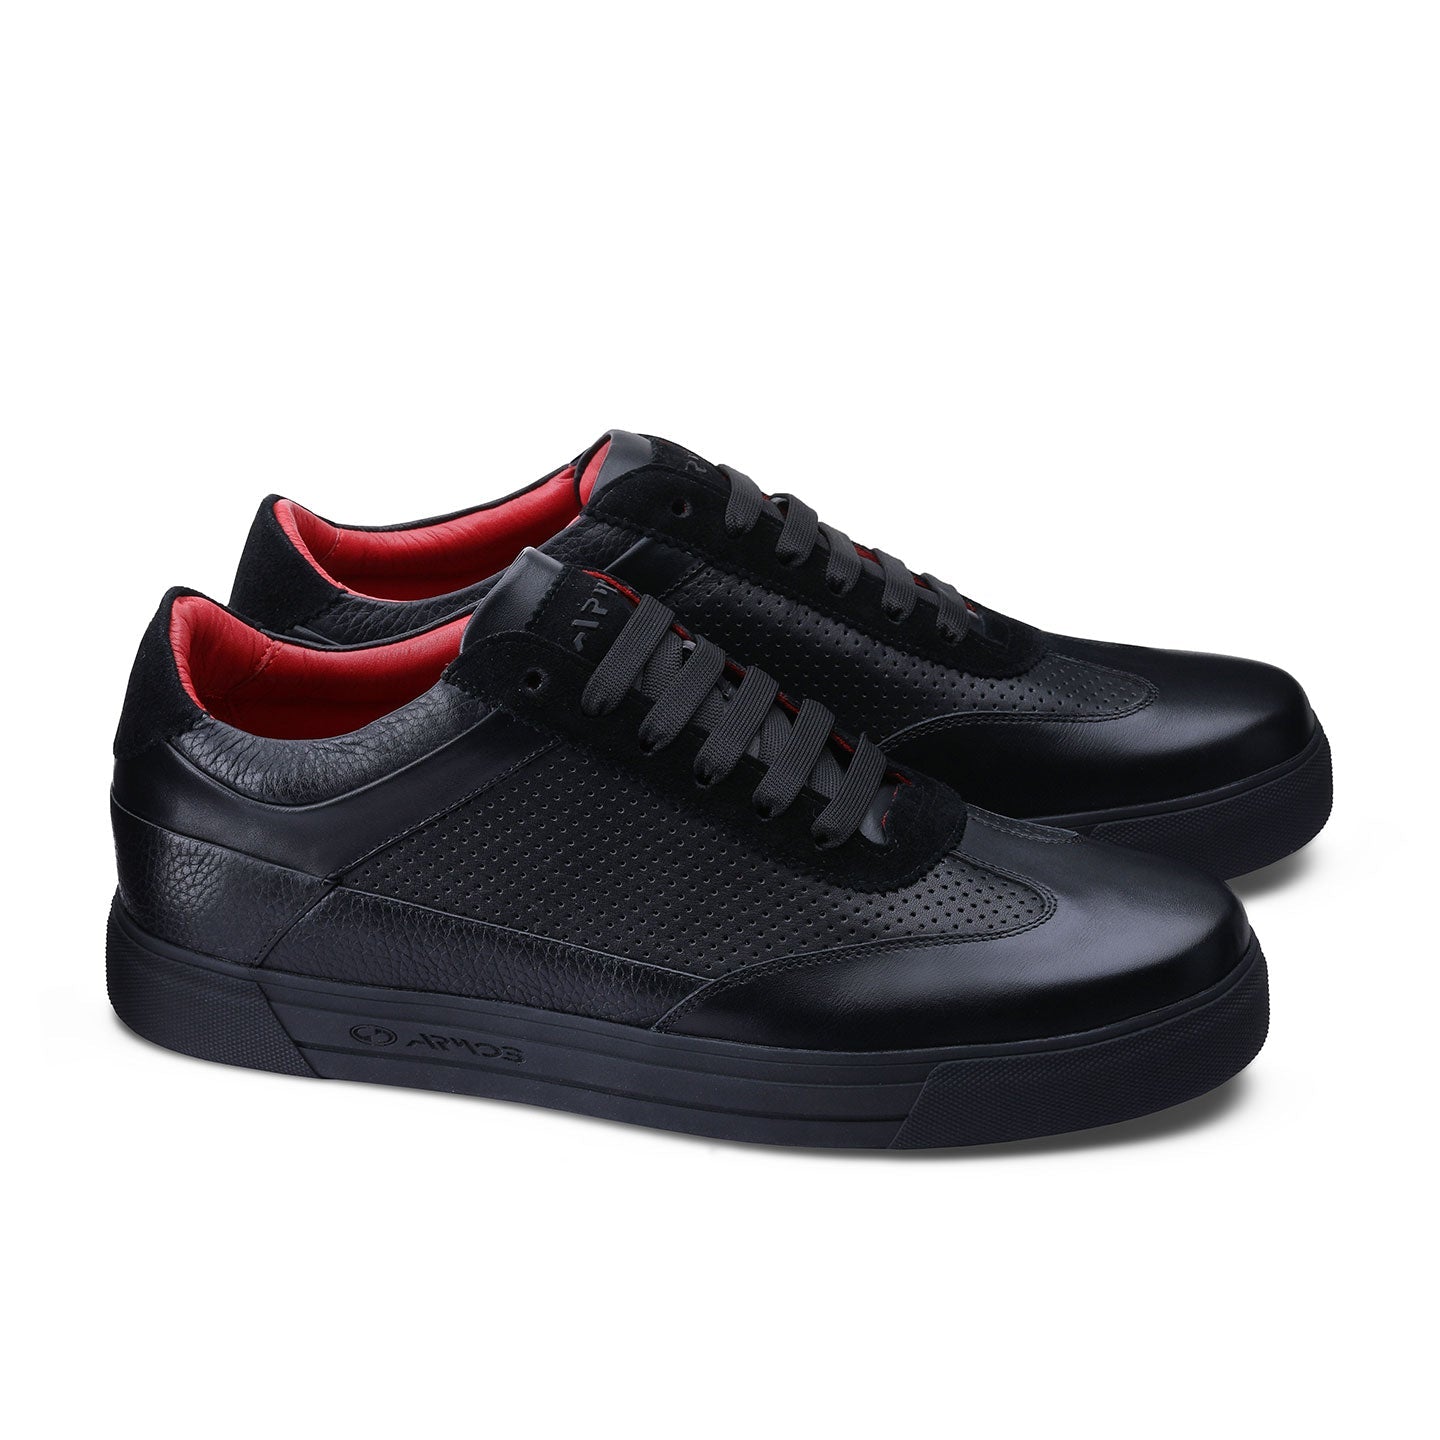 Breathable black sneakers